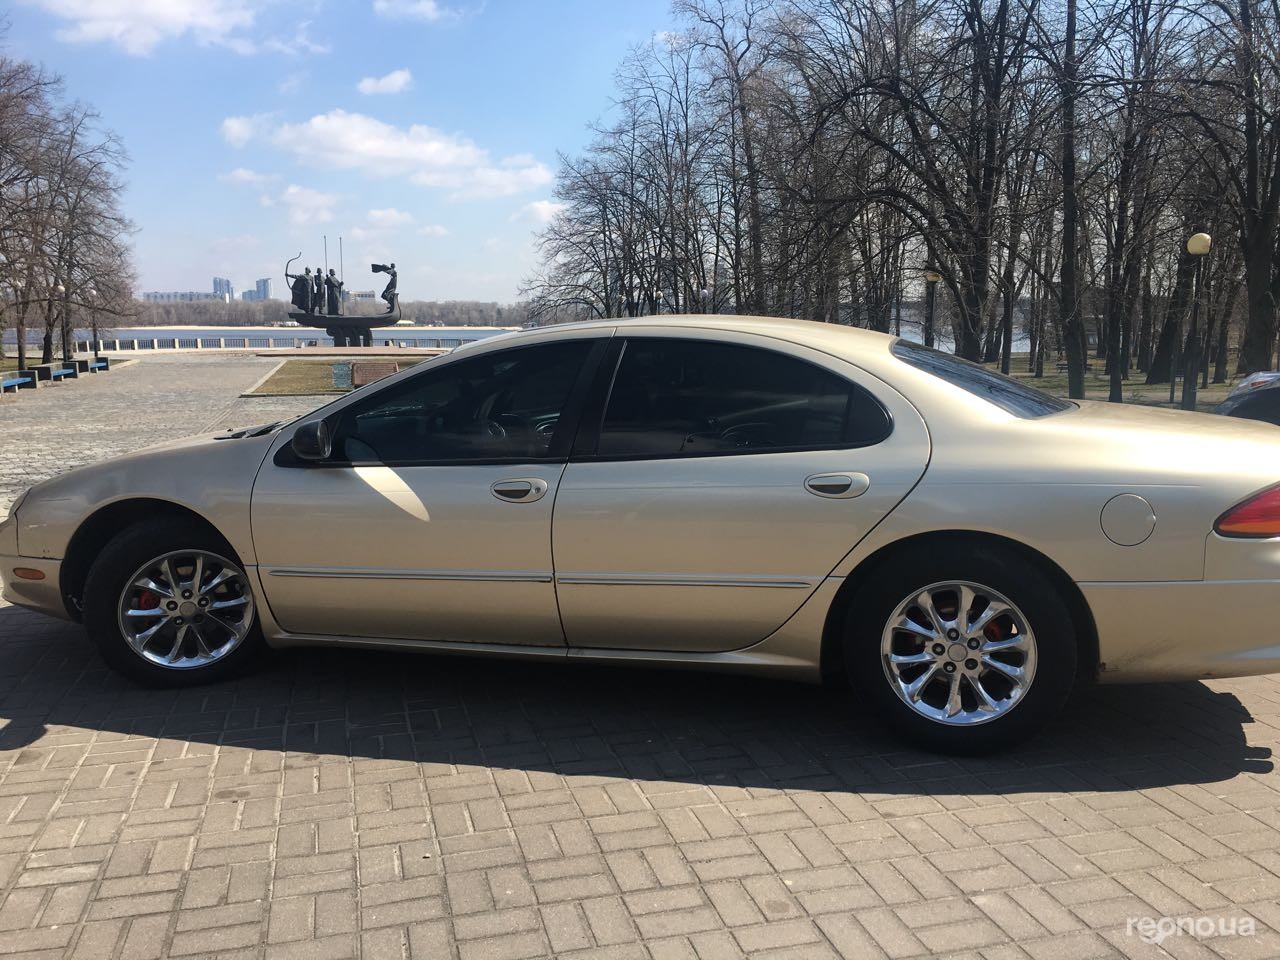 Купить Chrysler 300 M 2000 за 3 500, Киев REONO